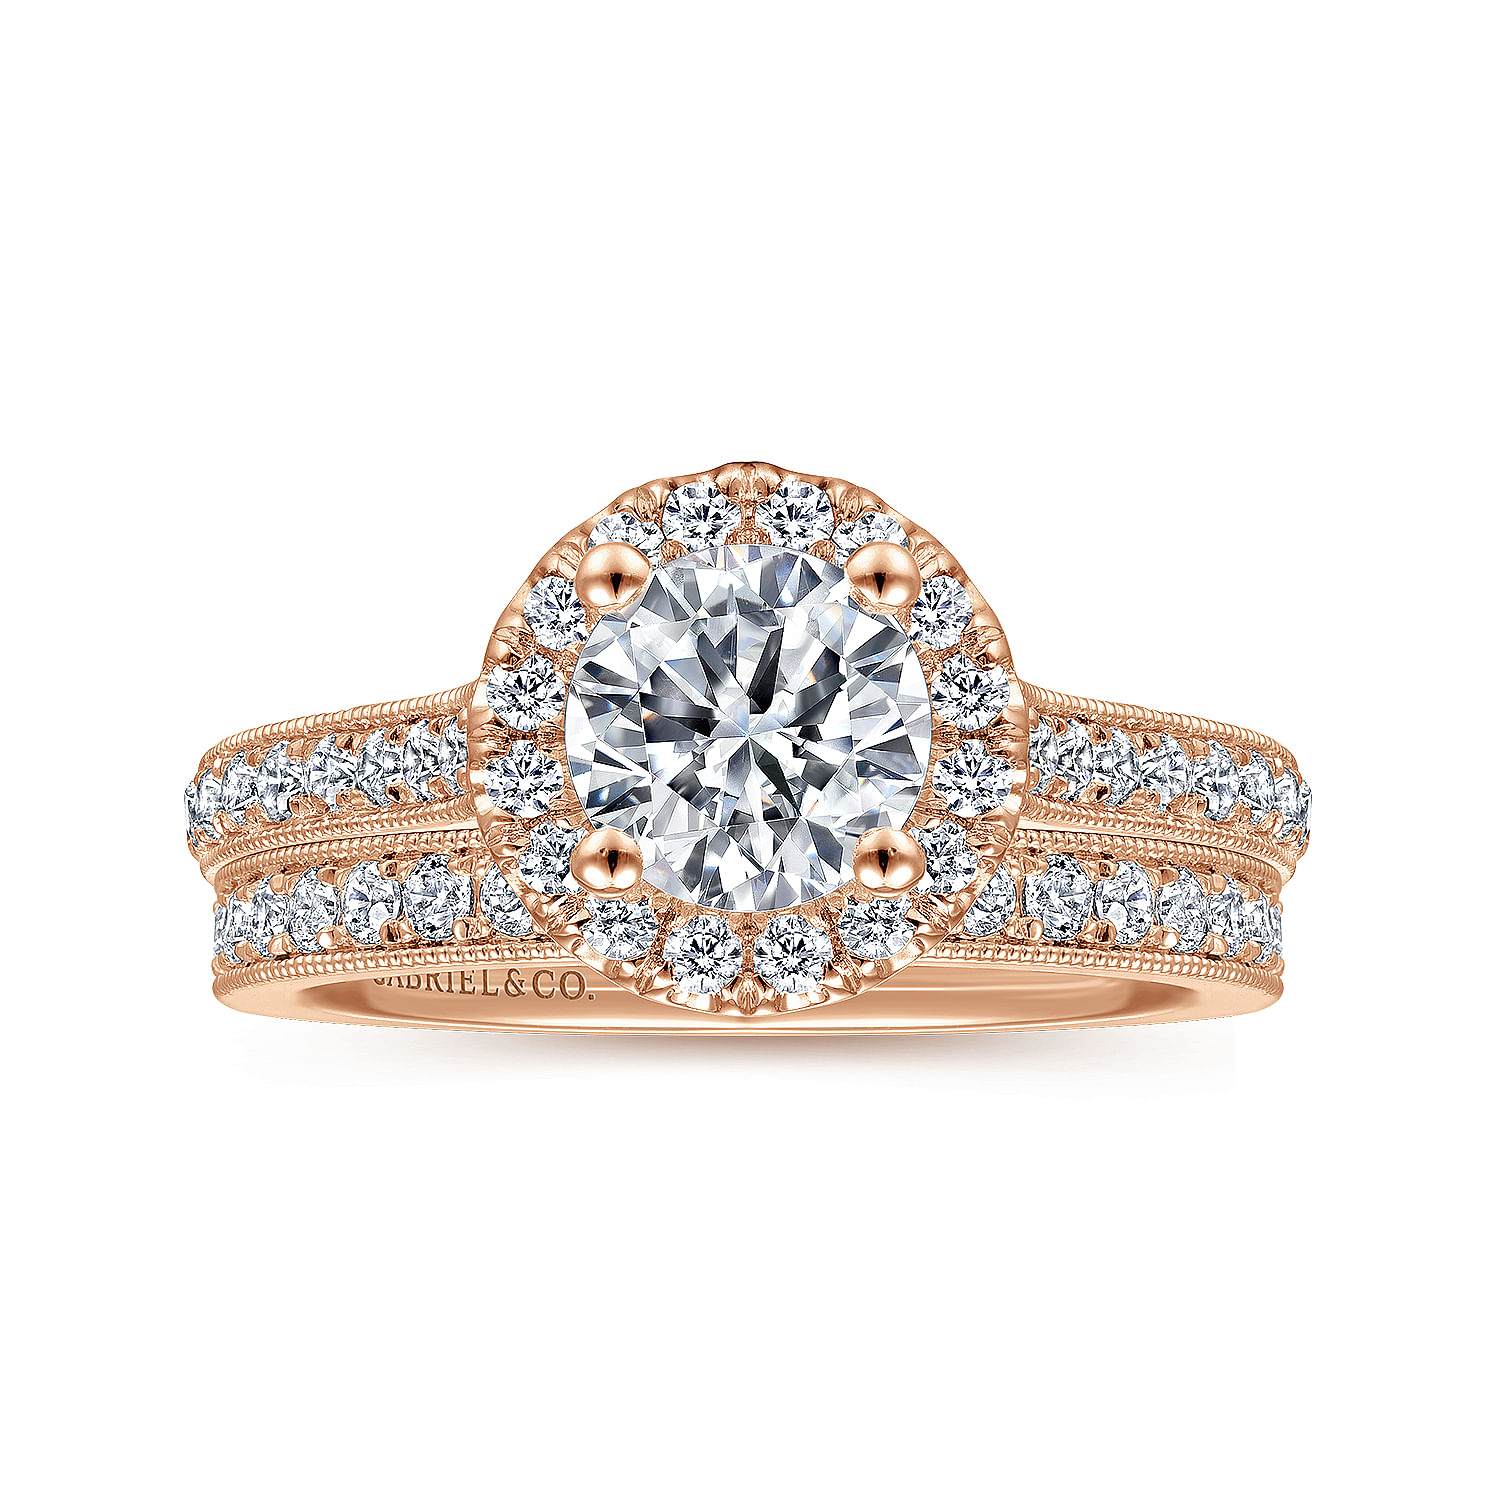 Vintage Inspired 14K Rose Gold Round Halo Diamond Engagement Ring